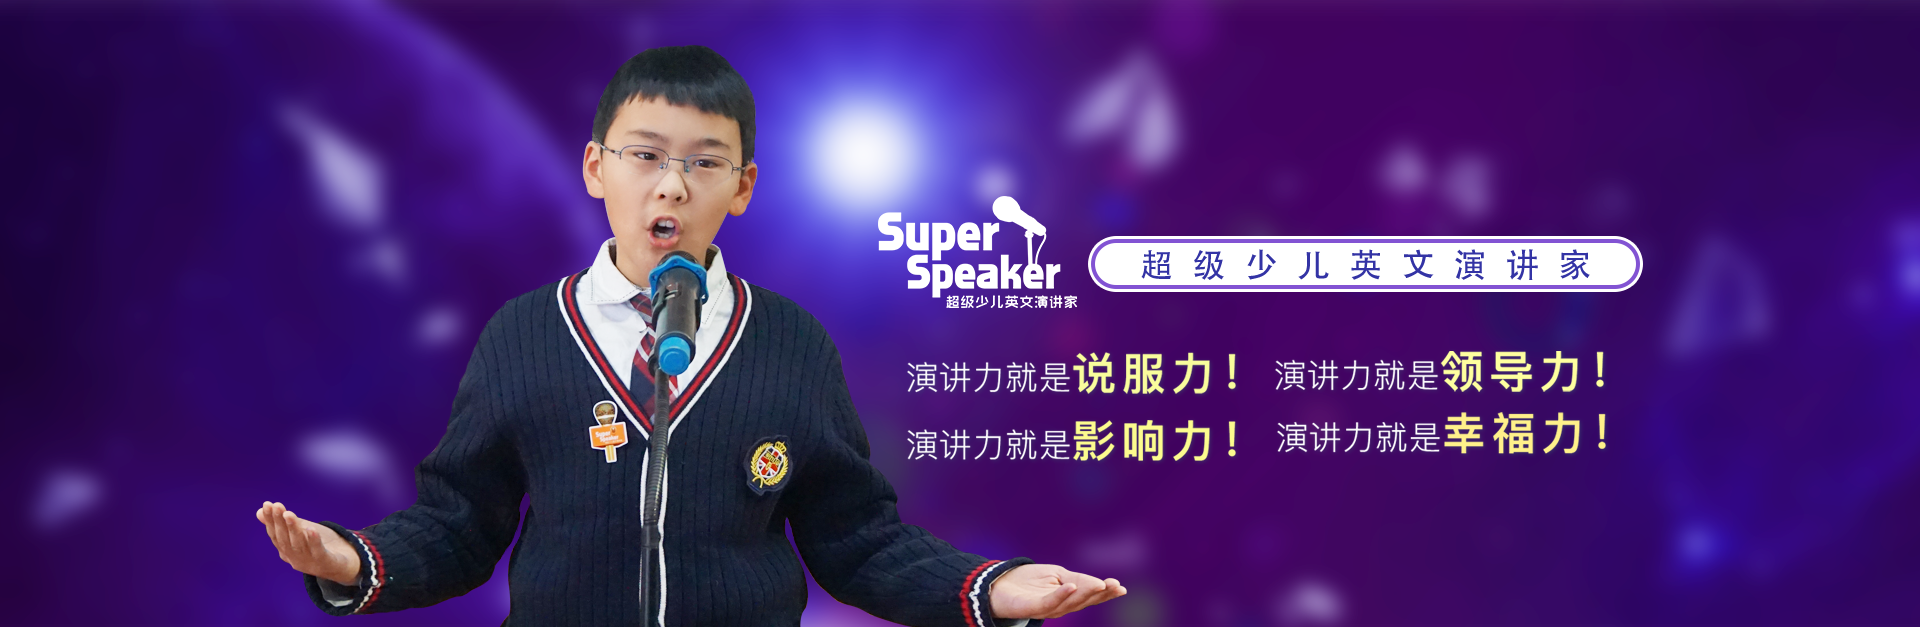 Super Speaker超级少儿英文演讲家